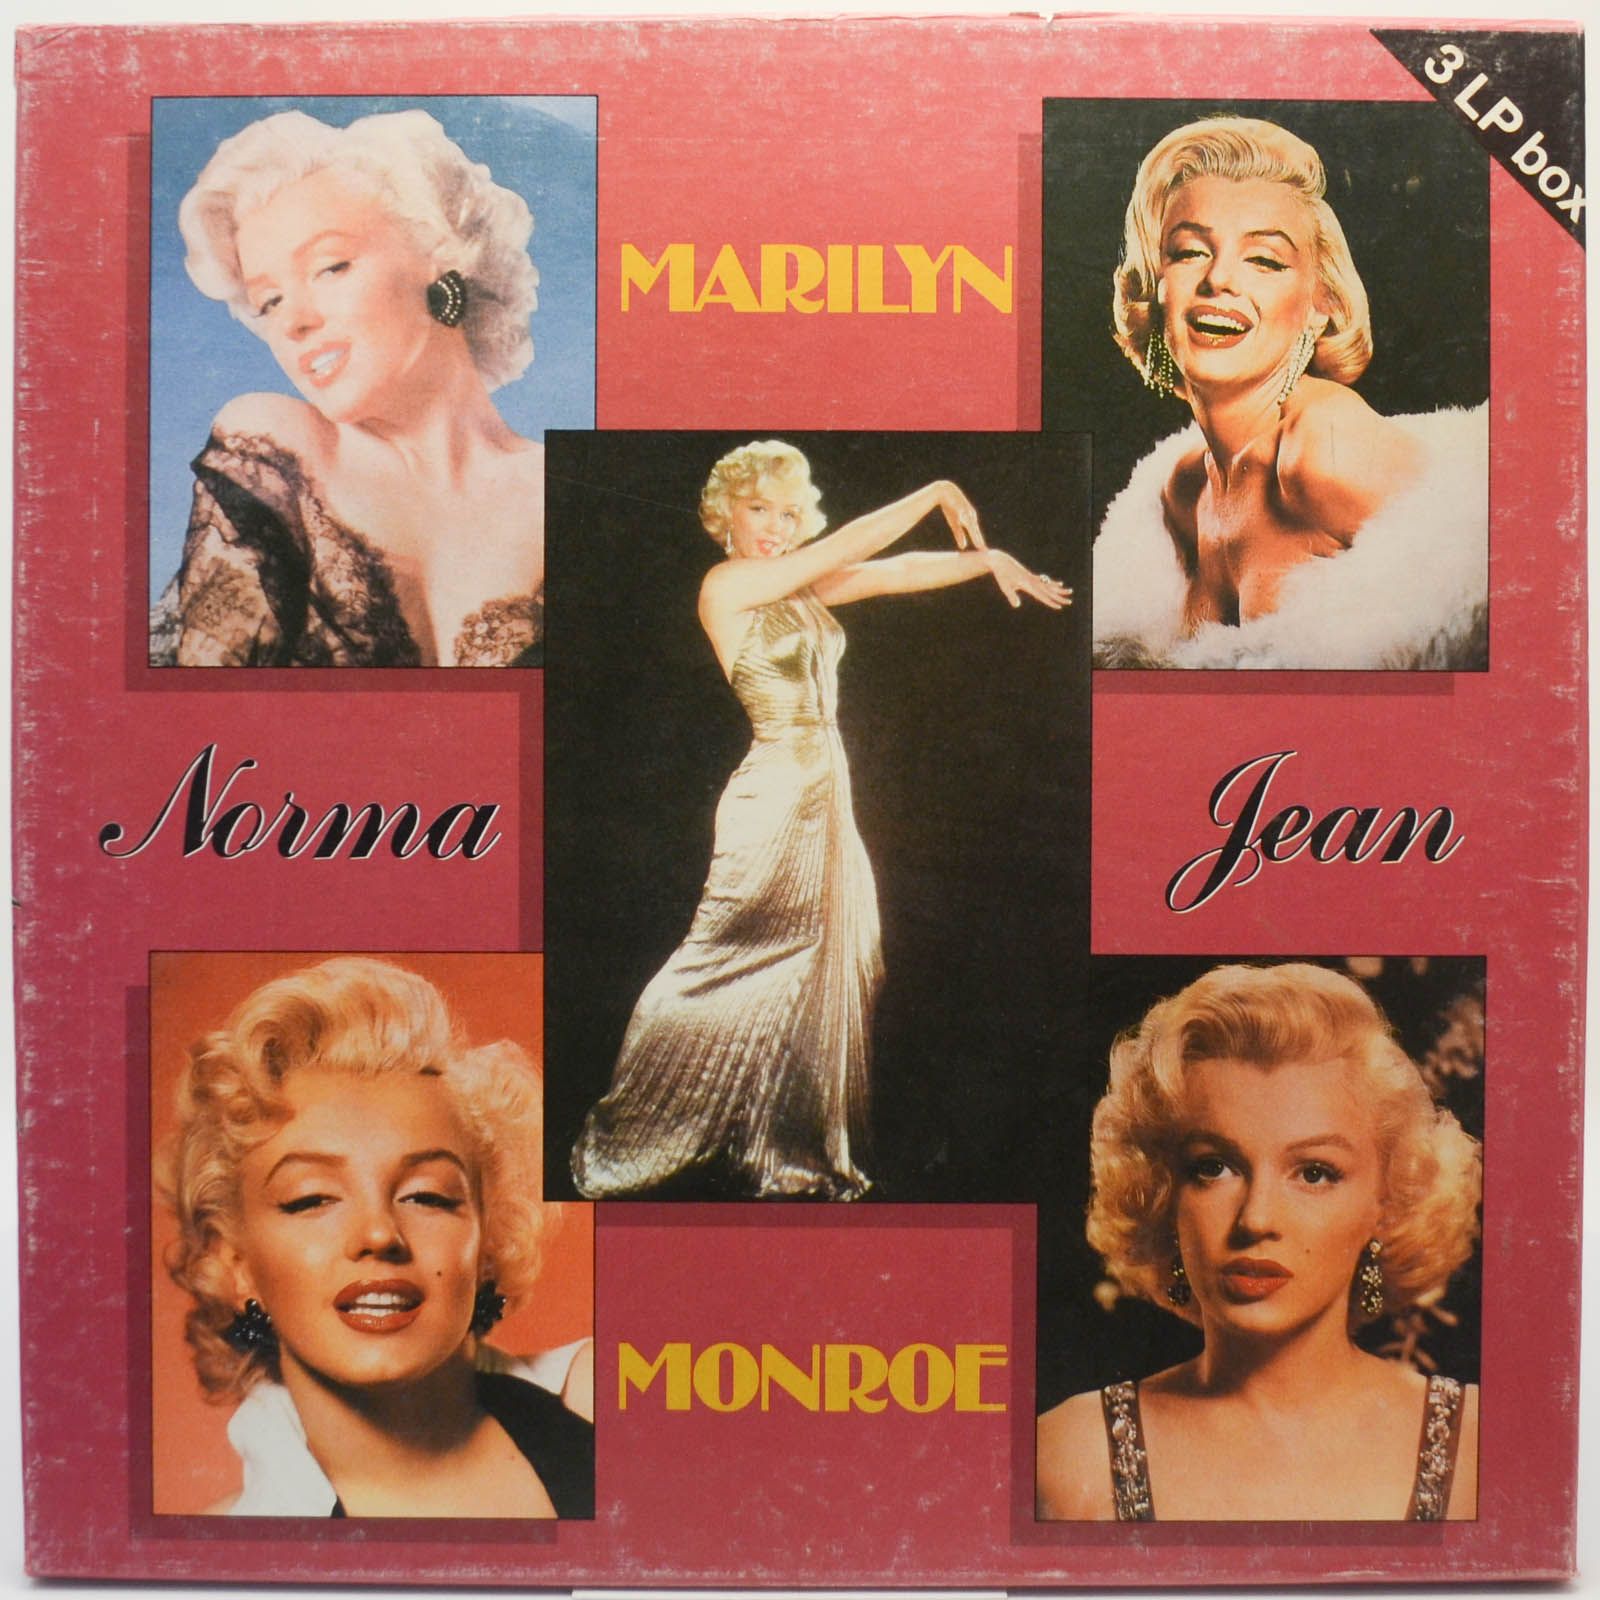 Marilyn Monroe — Norma Jean (Box-set), 1987